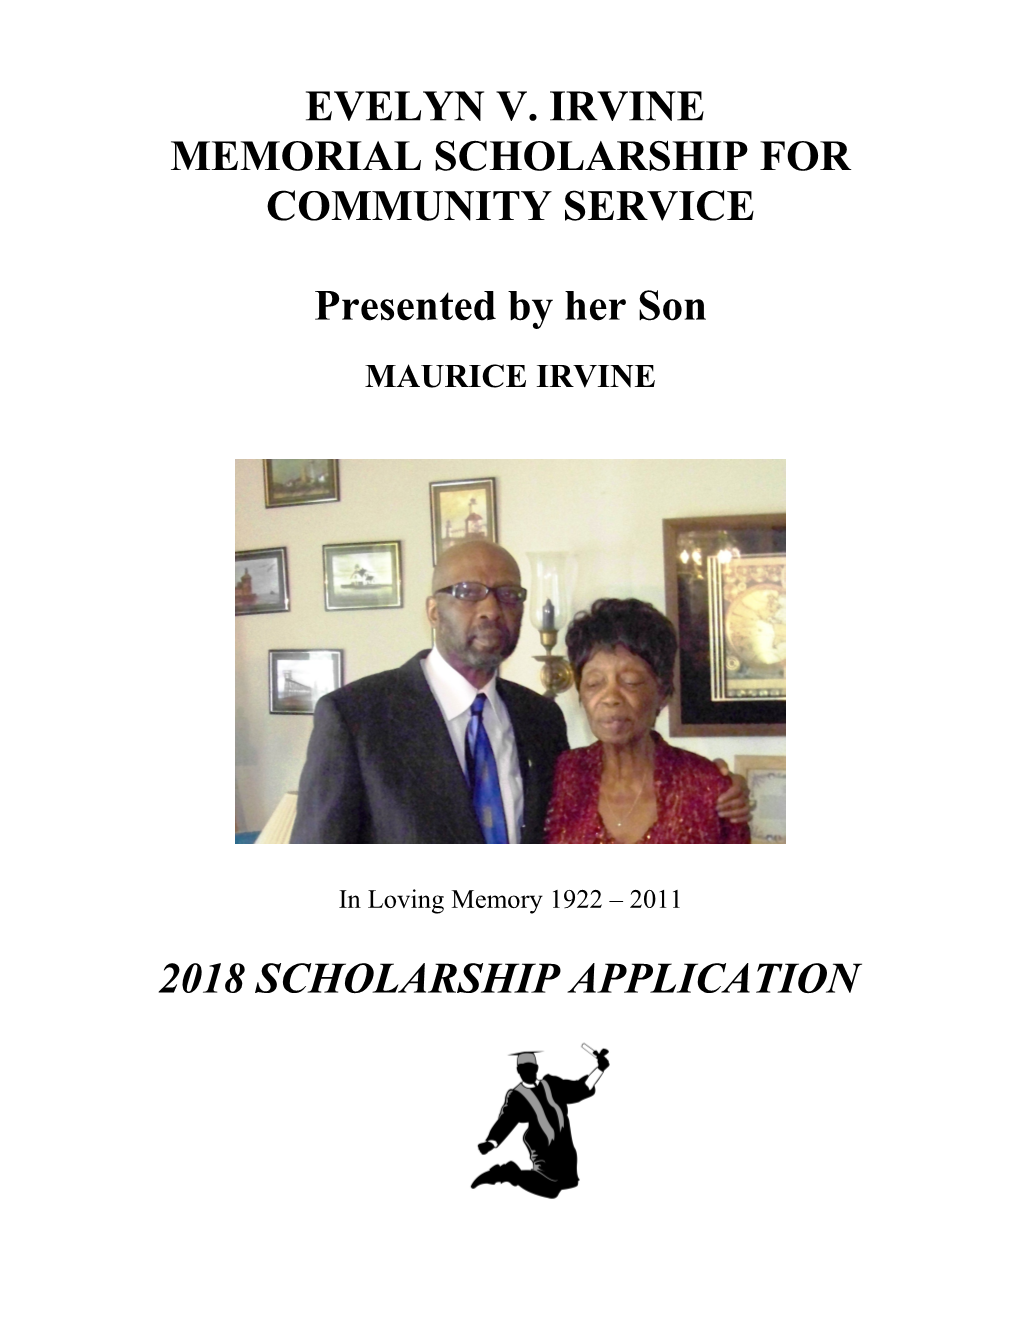 Memorial Scholarshipfor Community Service